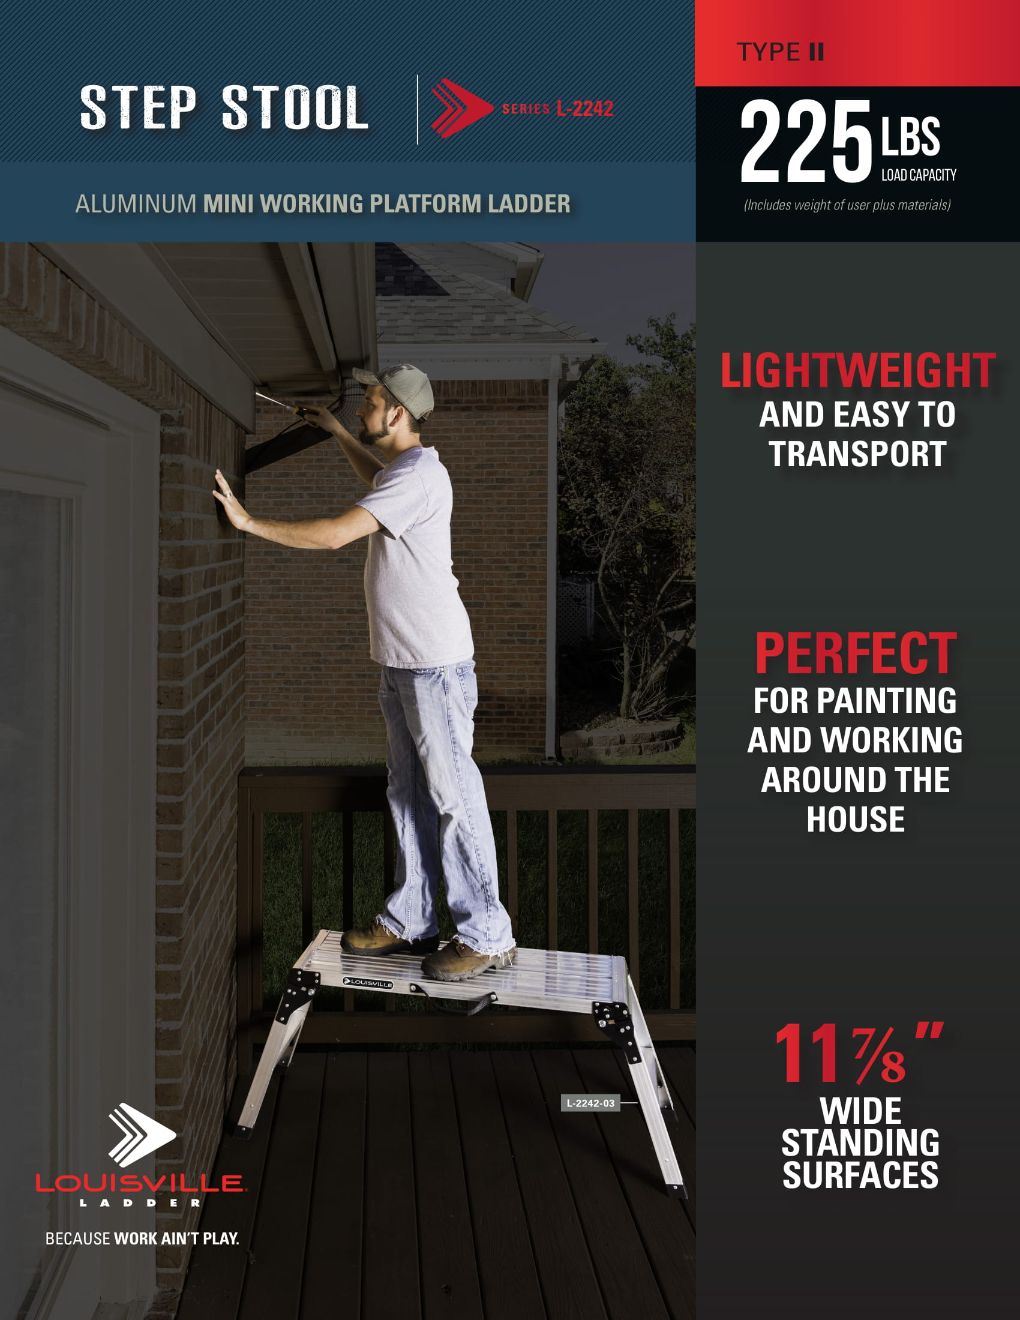 L-2242 Mini Working Platform Ladder Flyer and Spec Sheet Marketing Material Image